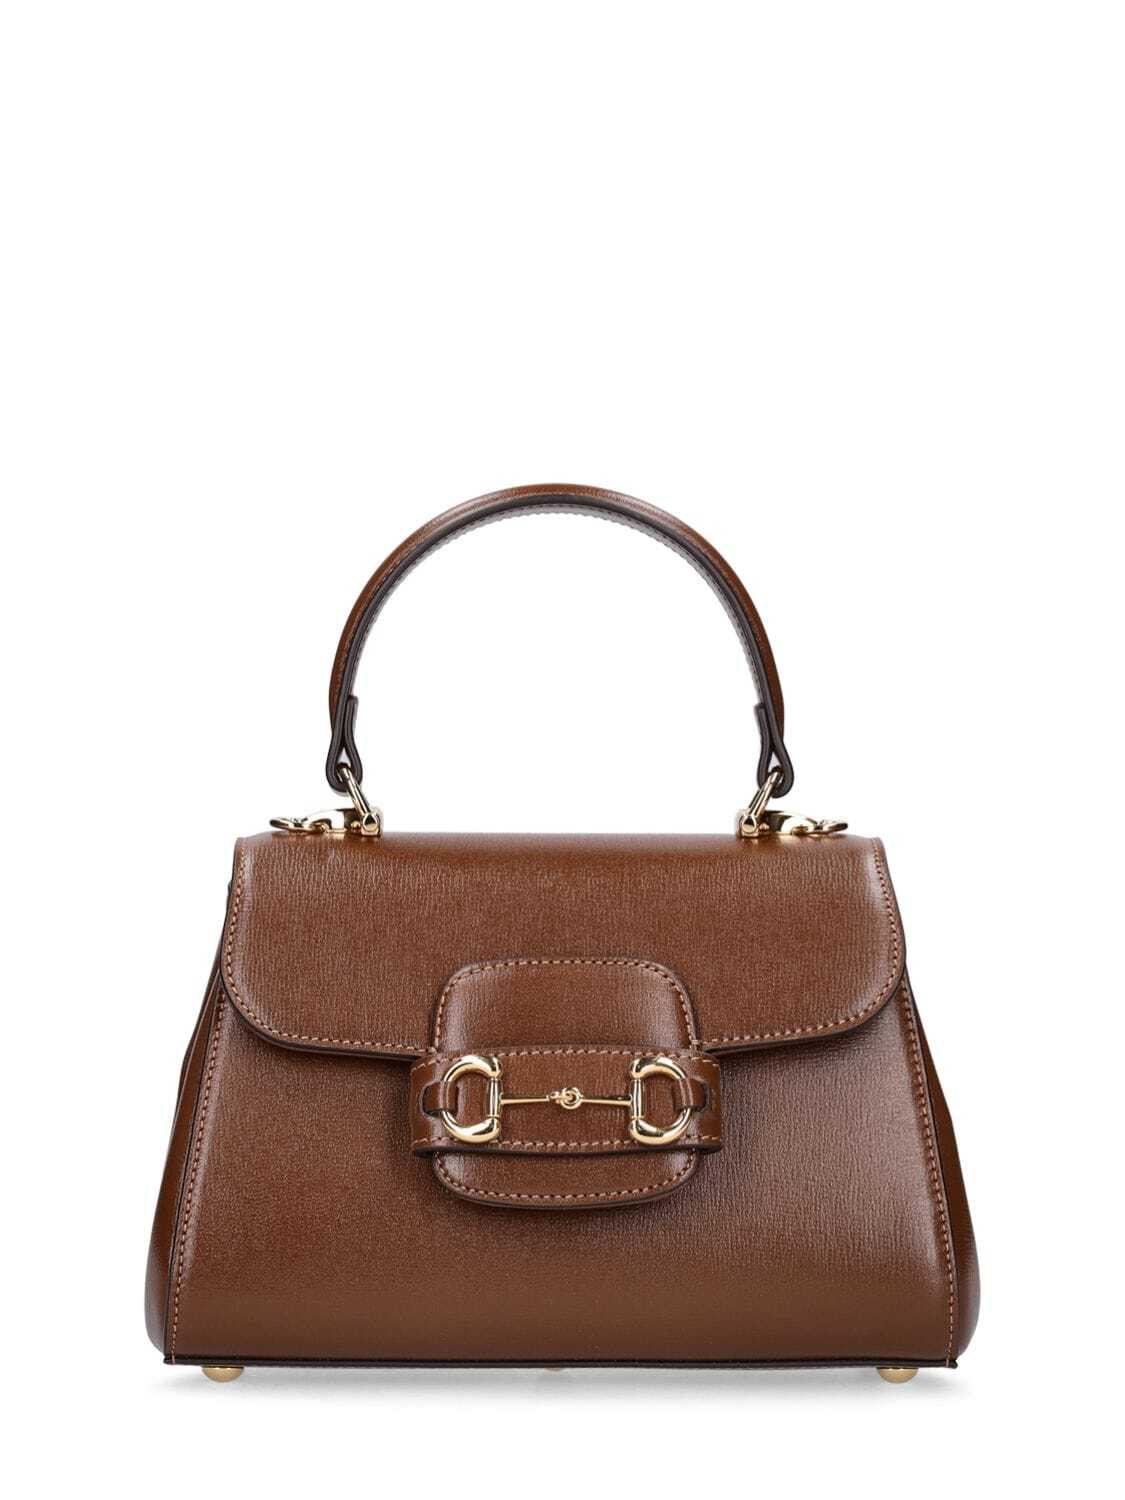 GUCCI 1955 Horsebit Leather Top Handle Bag in brown